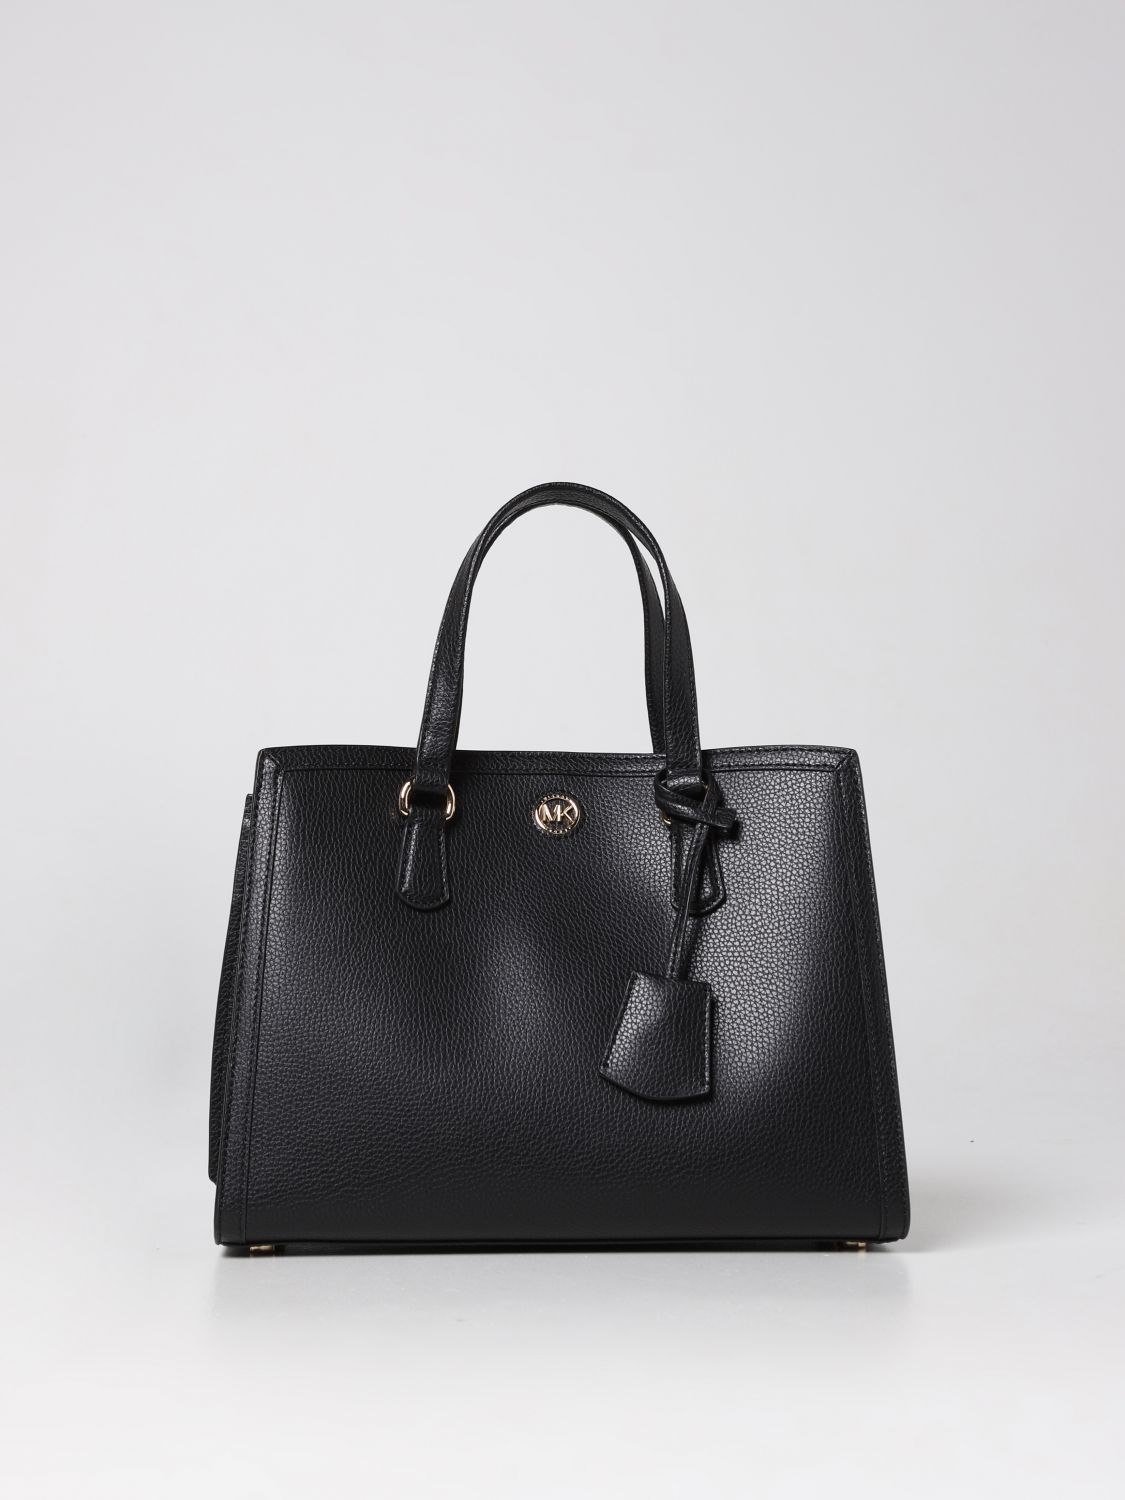 MICHAEL KORS: handbags for woman - Black | Michael Kors handbags ...